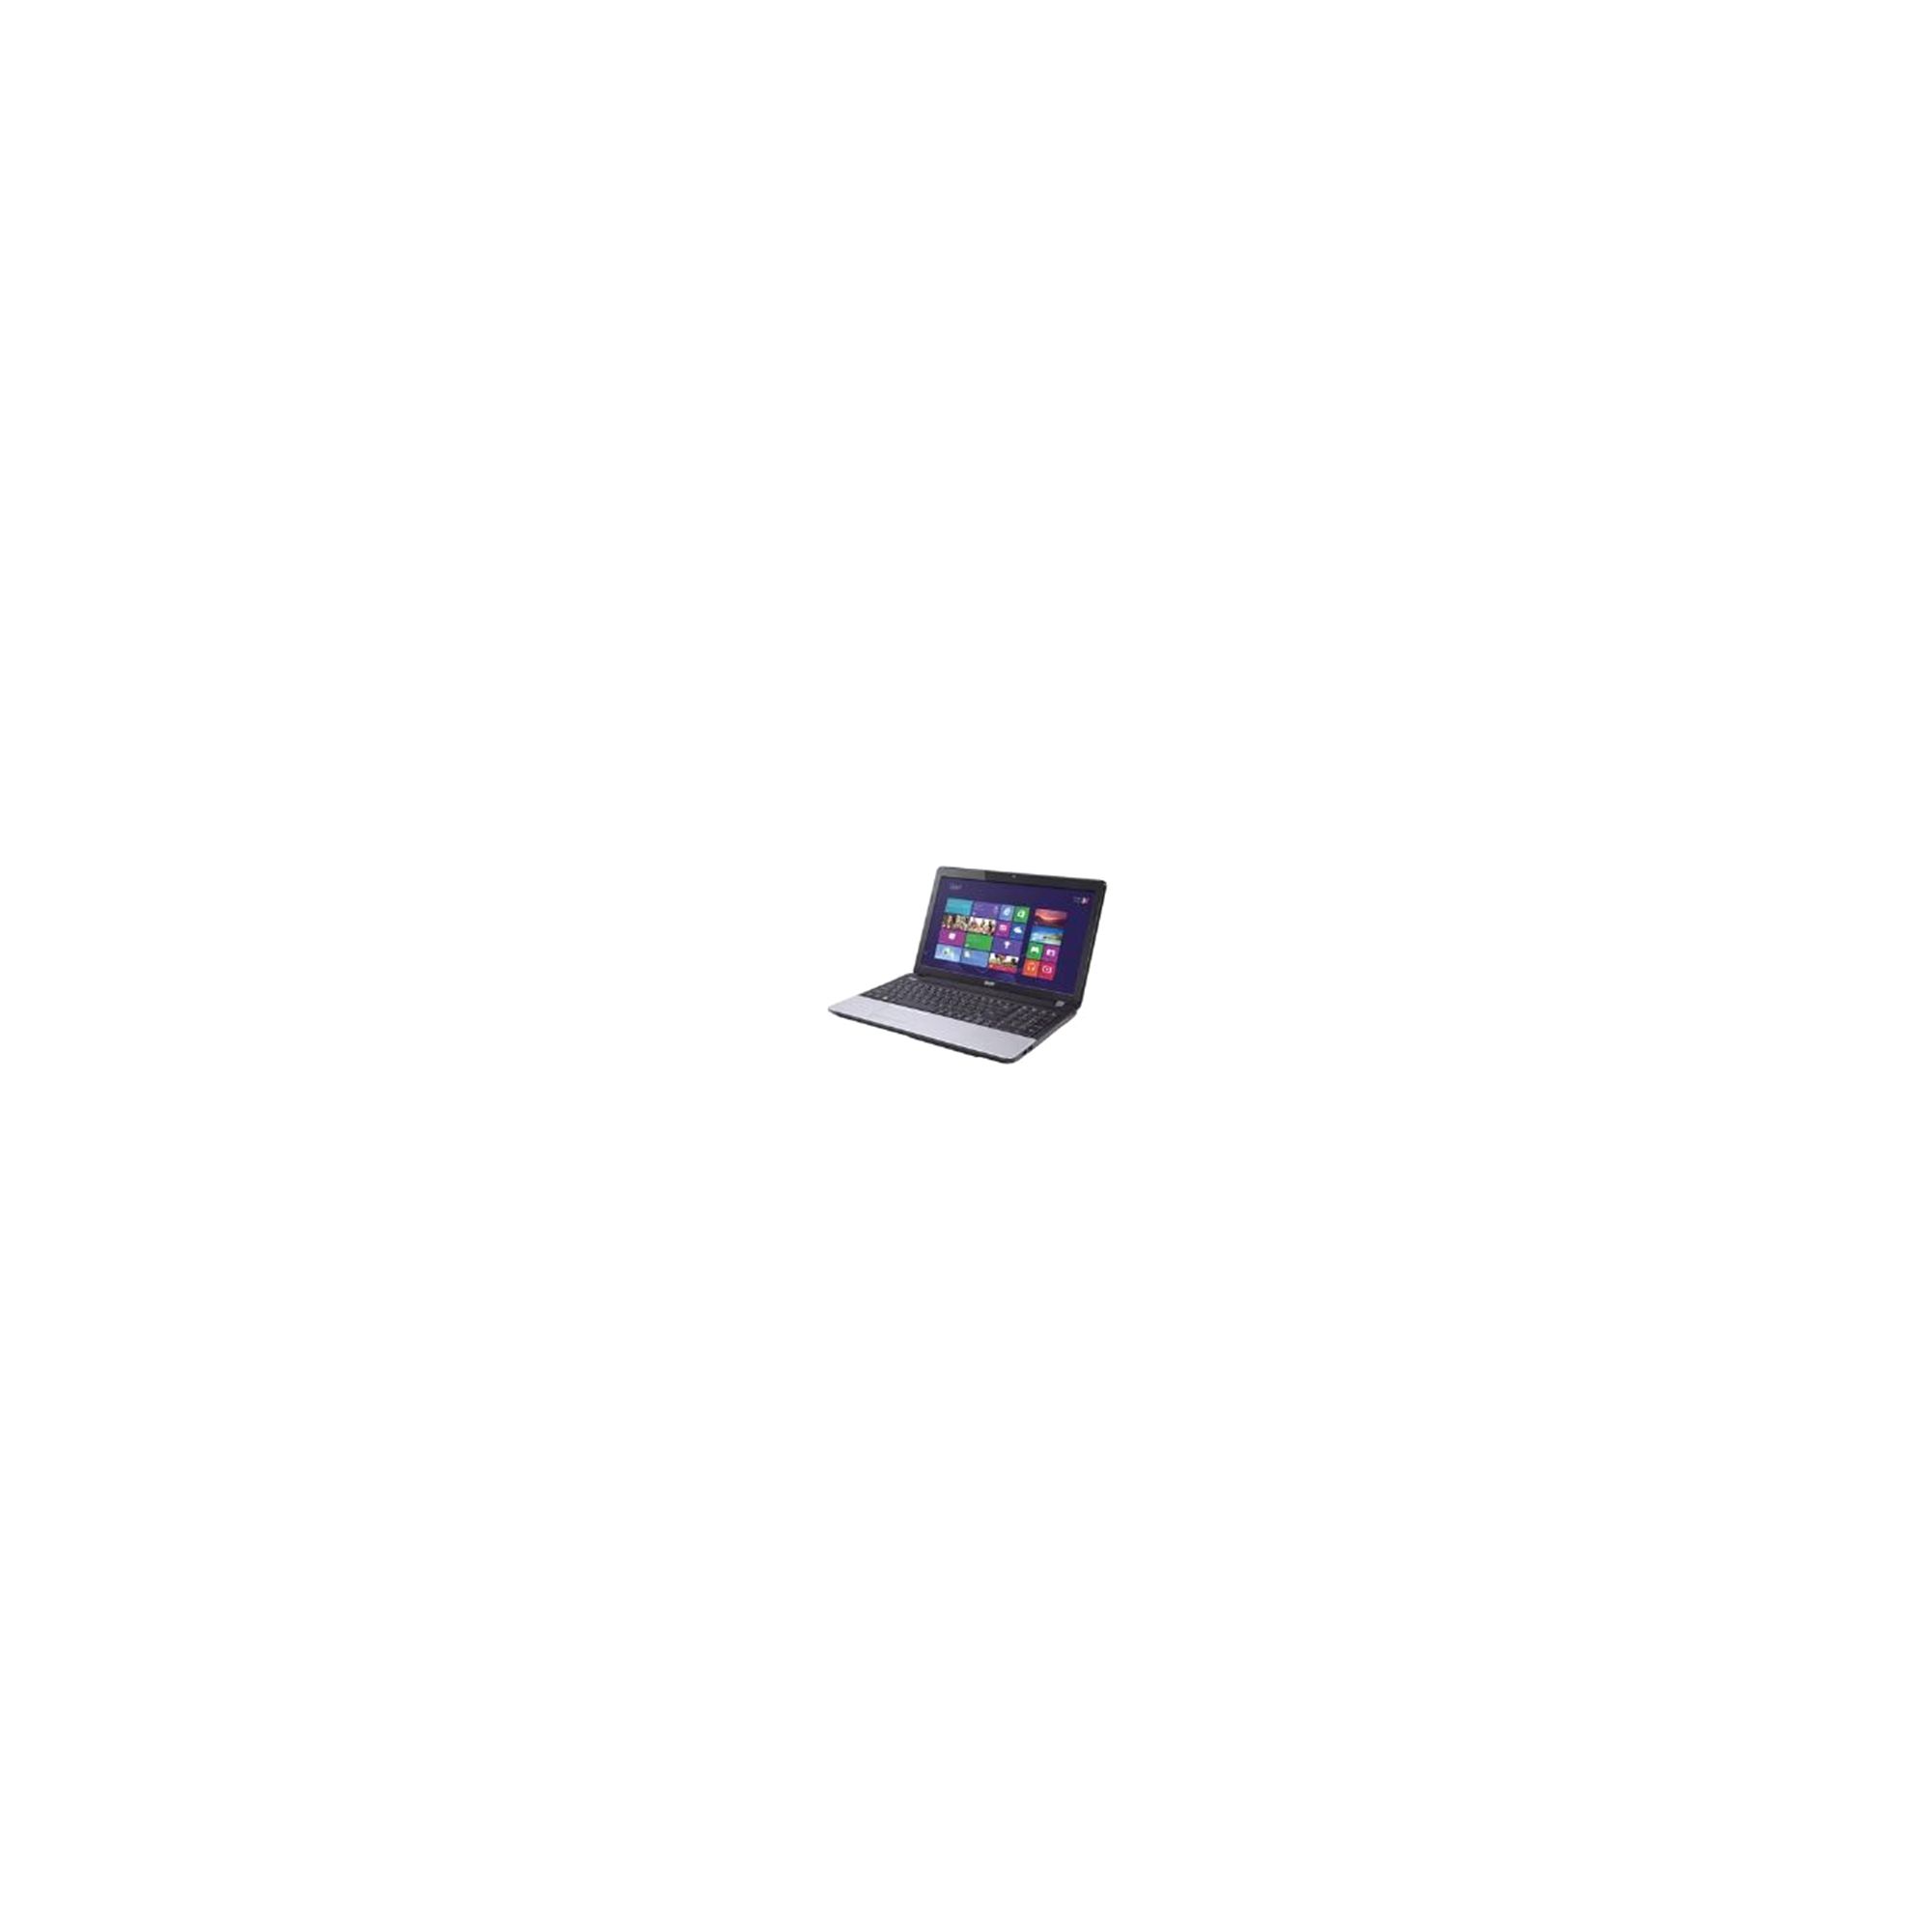 Acer TravelMate P253-M (15.6 inch) Notebook Core i3 (3120M) 2.5GHz 4GB 500GB DVD-SM DL WLAN BT Webcam Windows 7 Pro 64-bit/Windows 8 Pro 64-bit (UMA